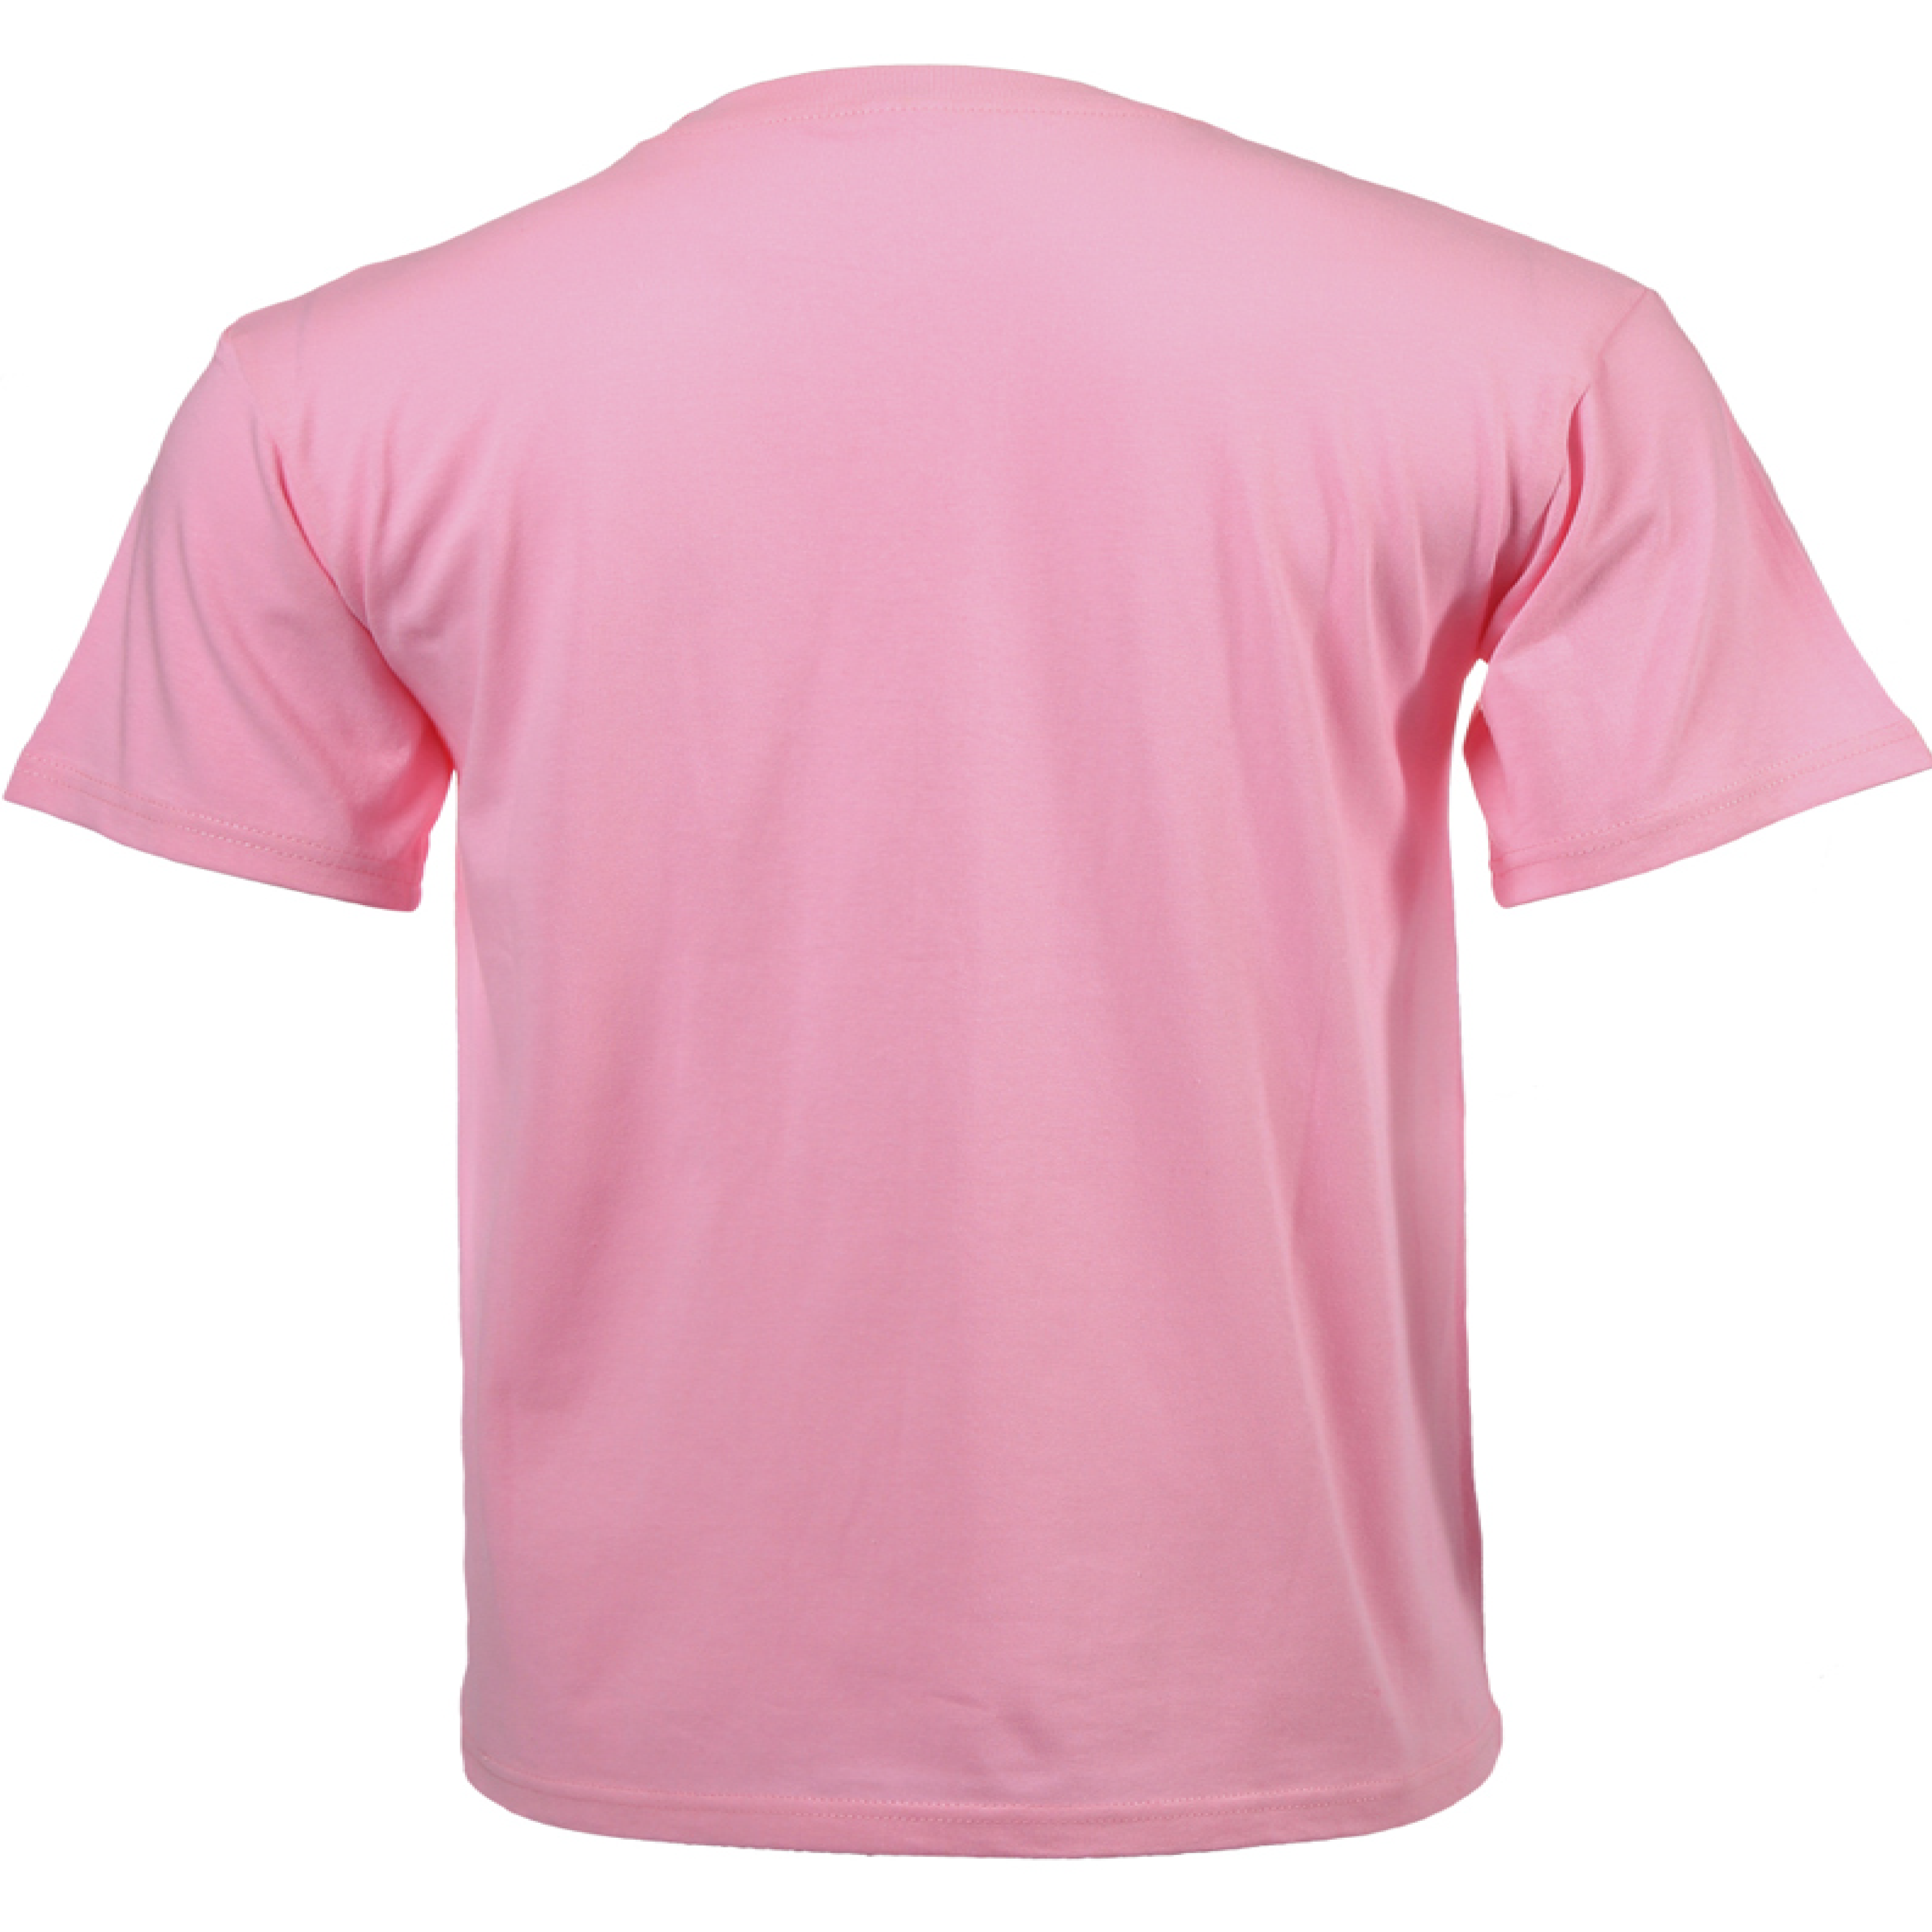 Pro Club Men's Heavyweight Short Sleeve T-Shirt - Pink